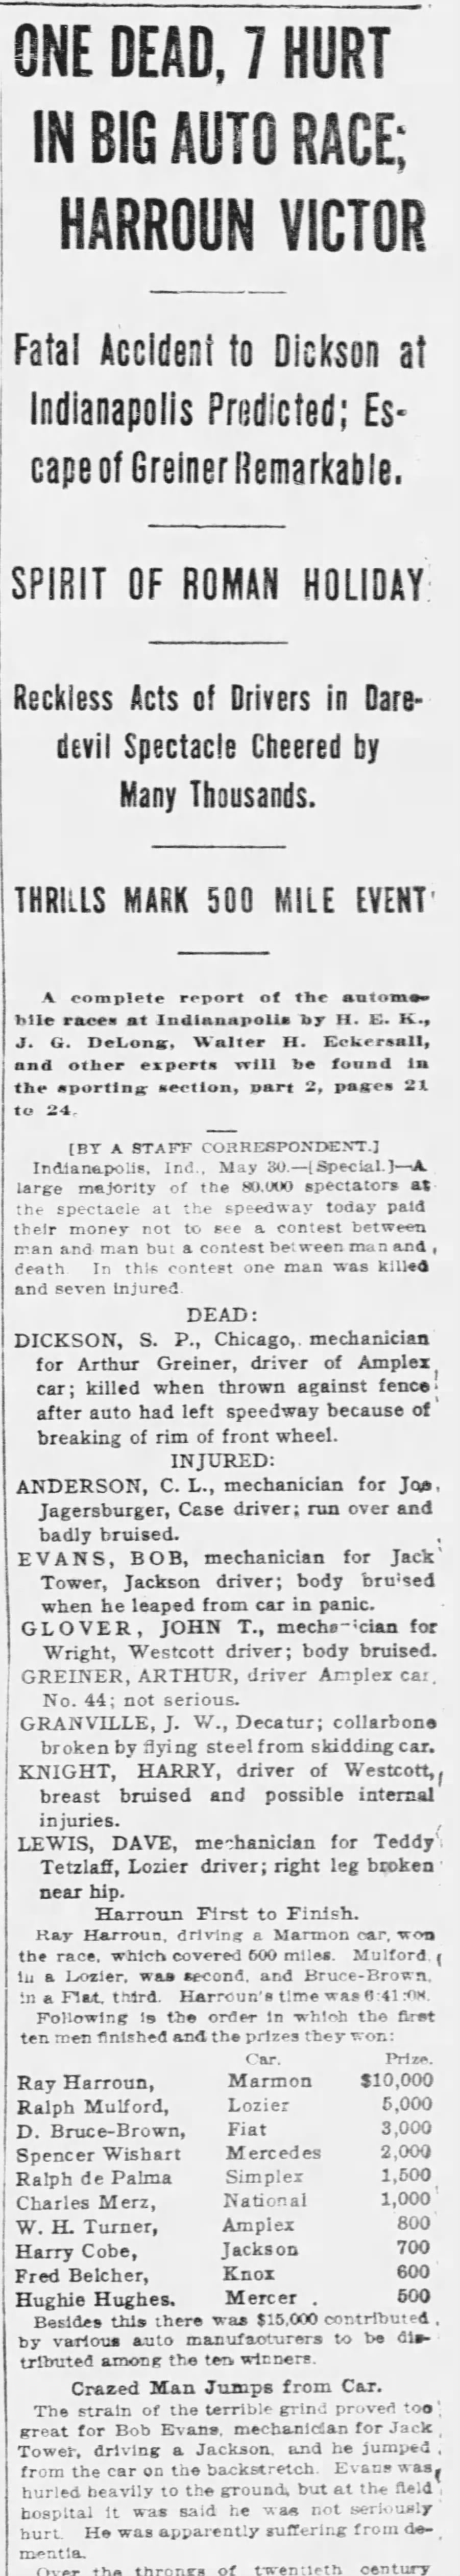 1911 Indy 500 story.jpg